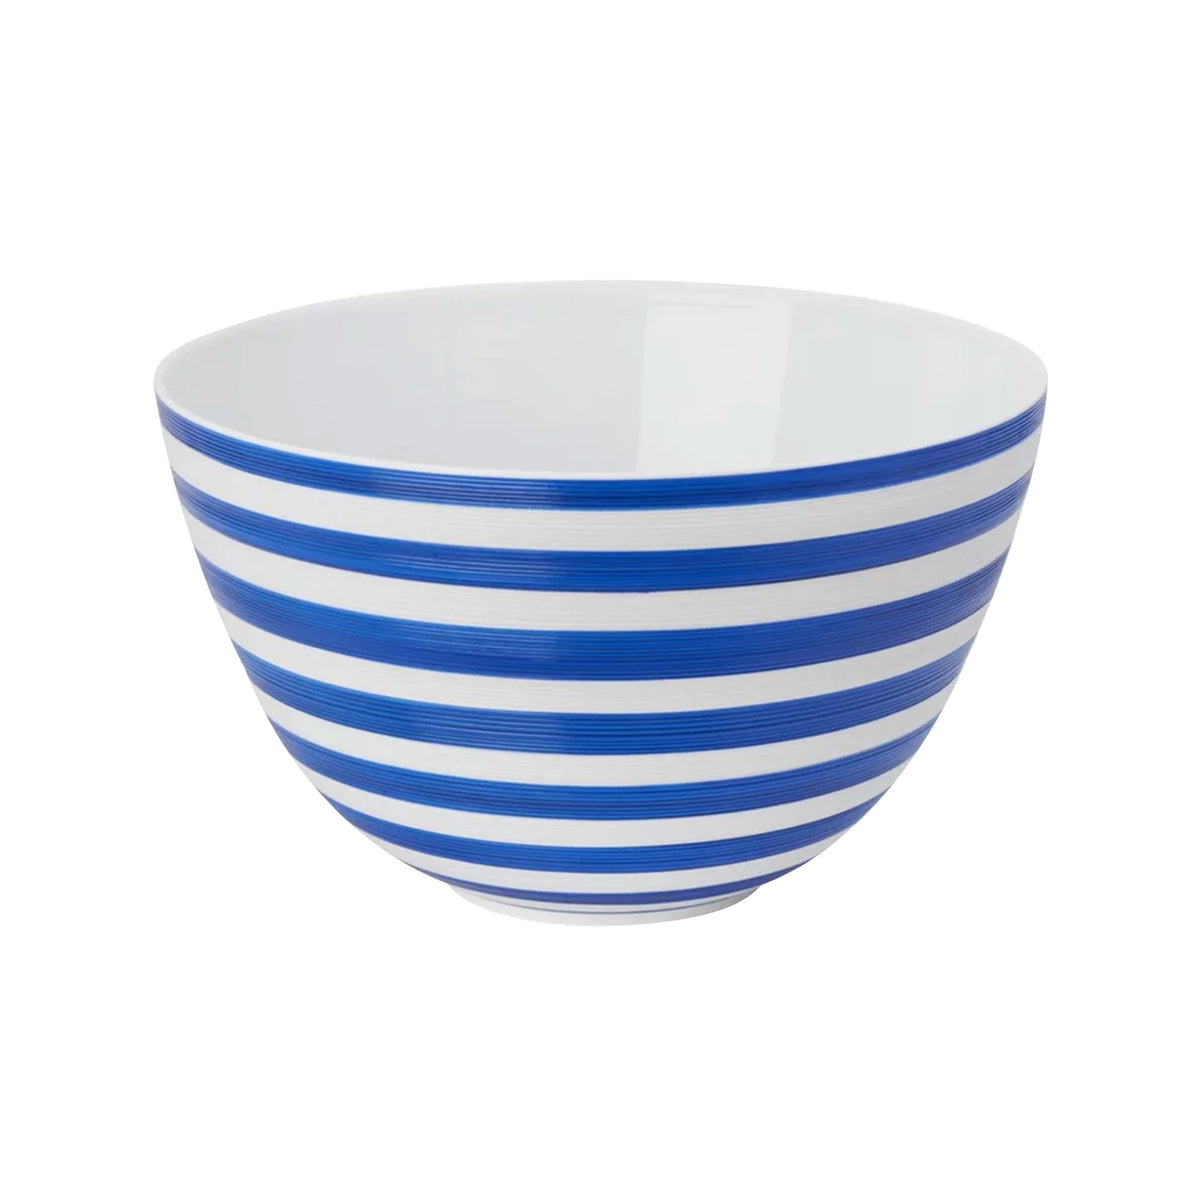 HEMISPHERE Striped Royal Blue - Salad serving bowl, maxi